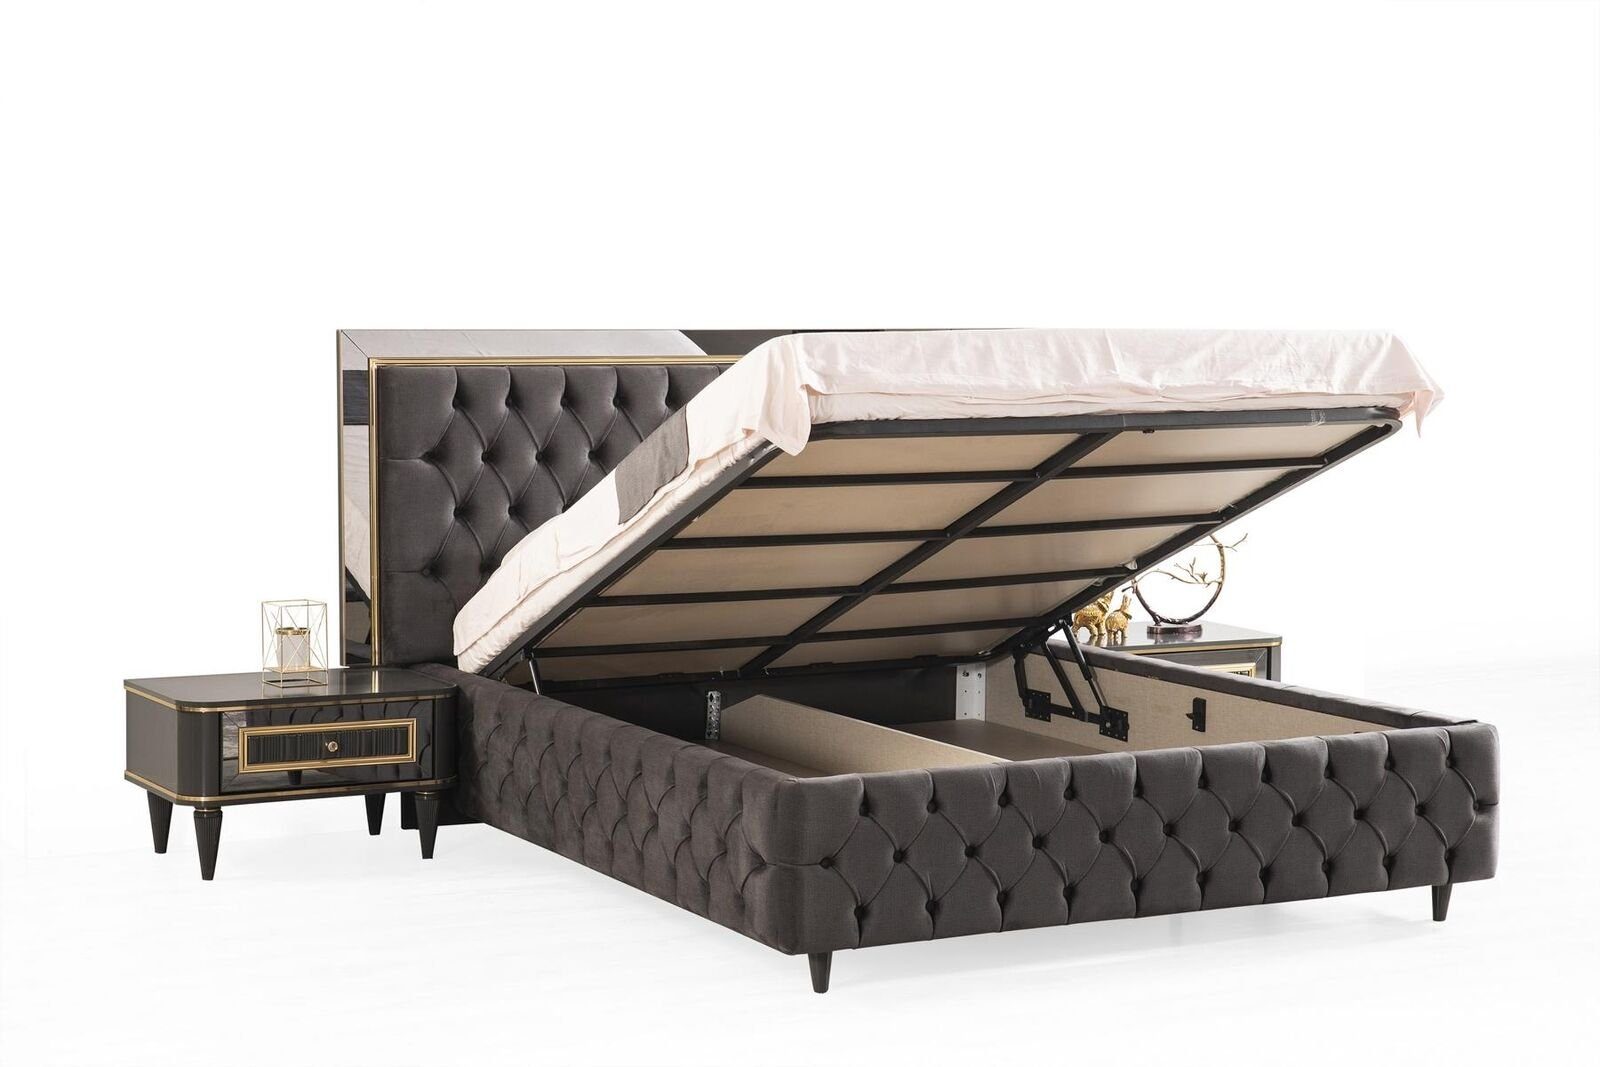 Bett Made JVmoebel Luxus Edle mit Edelstahl im Rahmen Bett Betten Schwarze, Europa Chesterfield